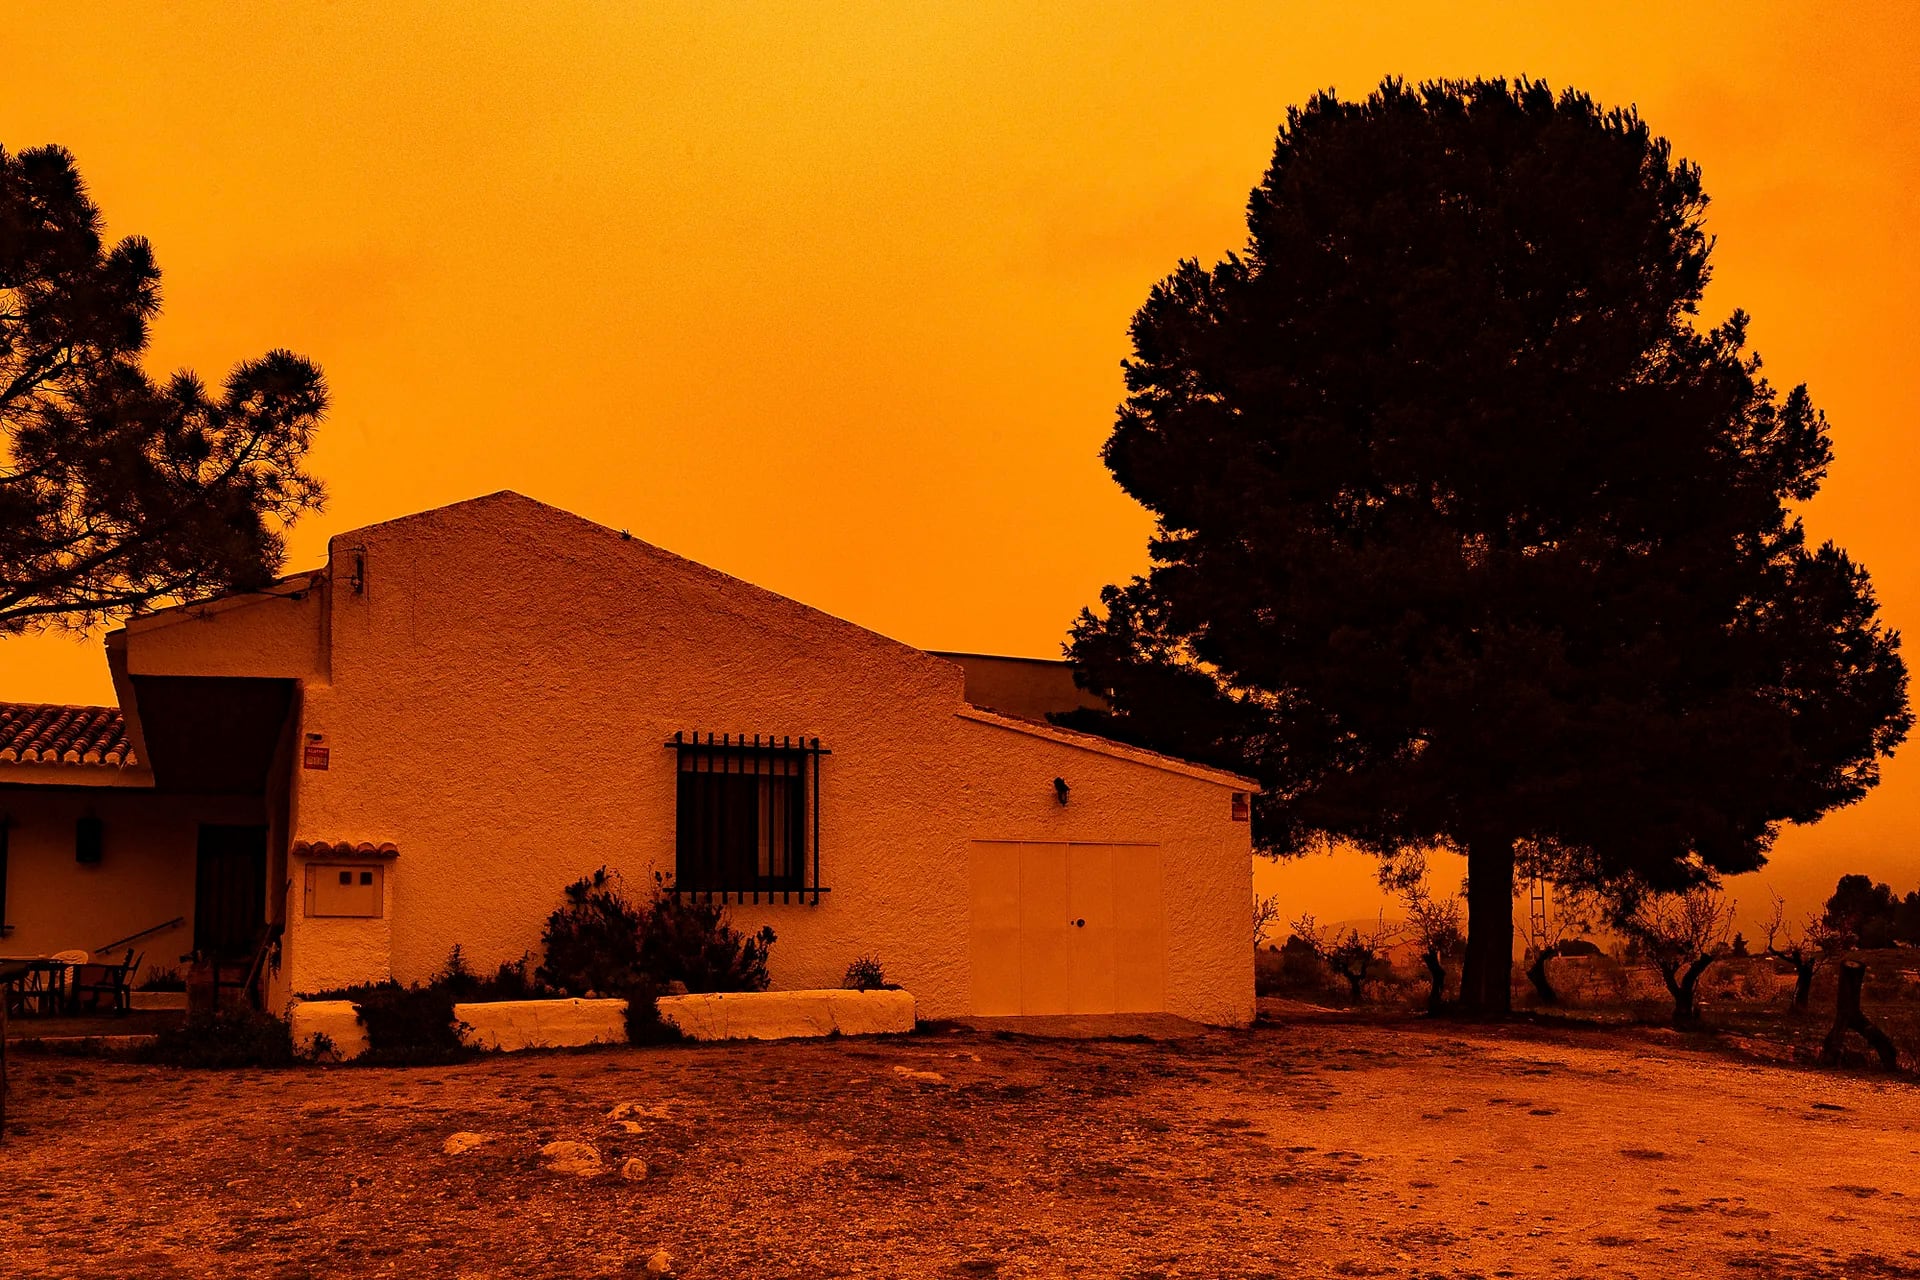 Sahara Dust Cloud: A sandstorm covering part of Spain in orange